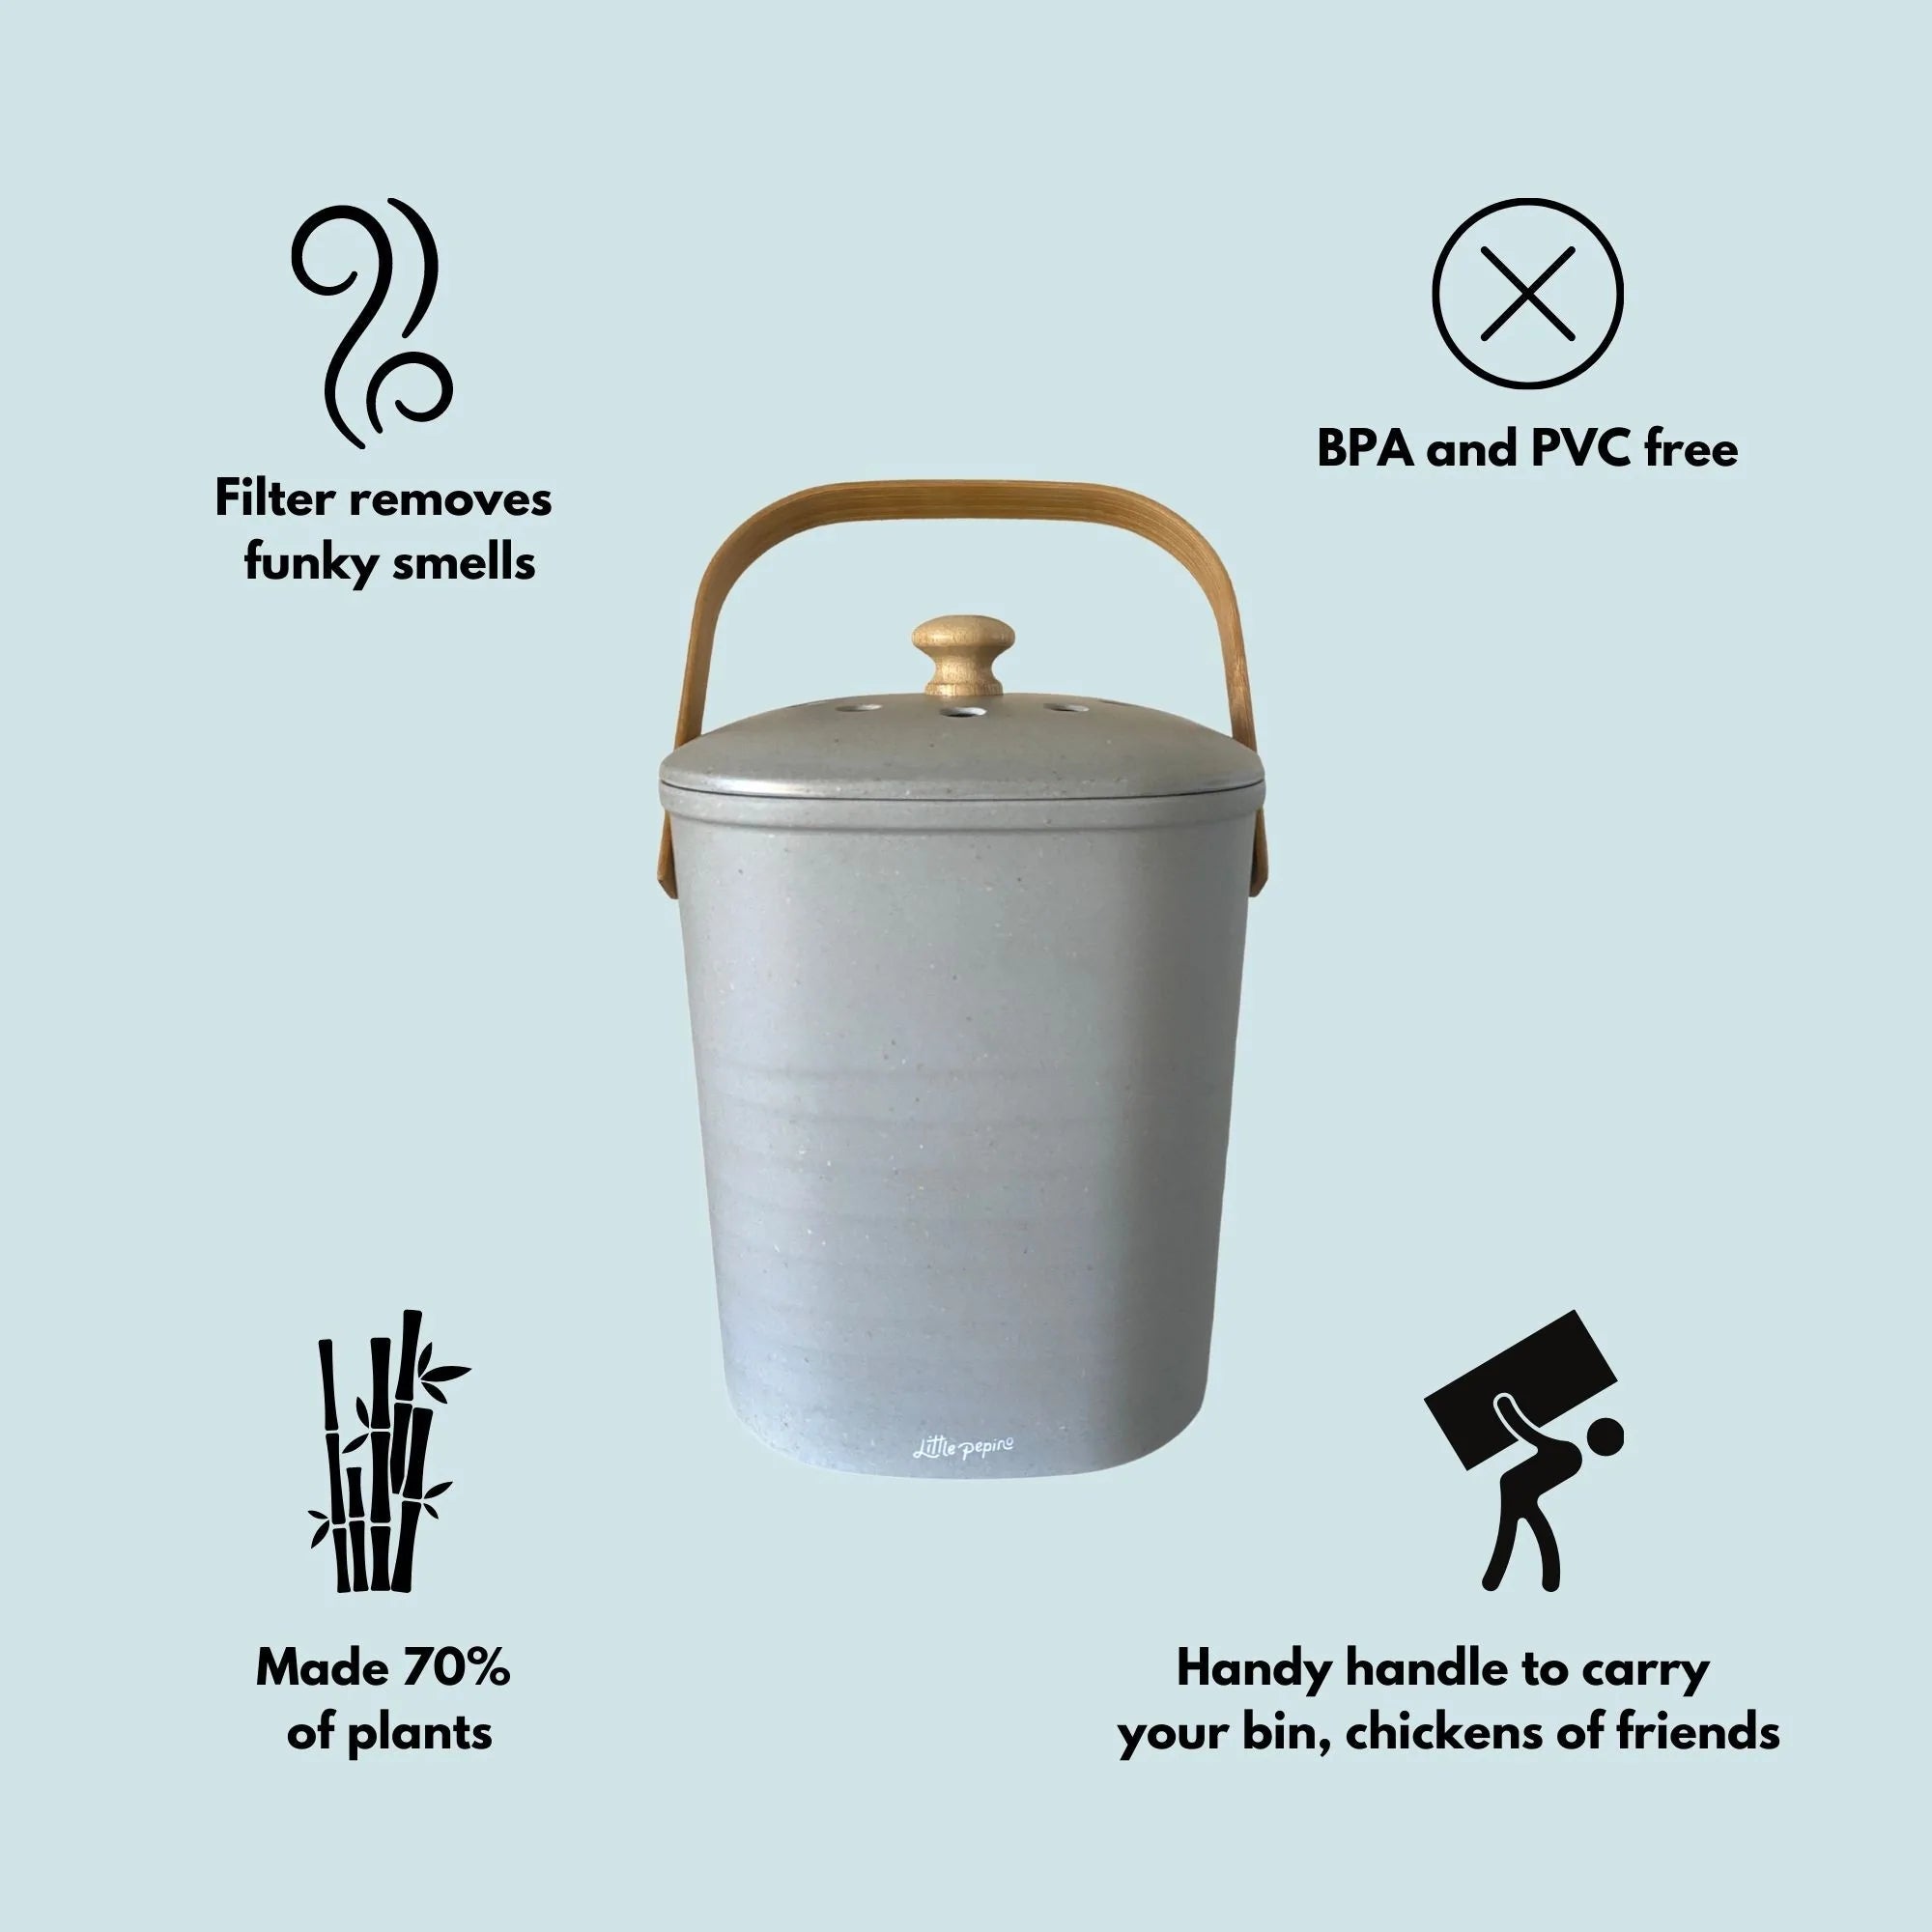 Order A Kitchen Pail – Rethink Compost